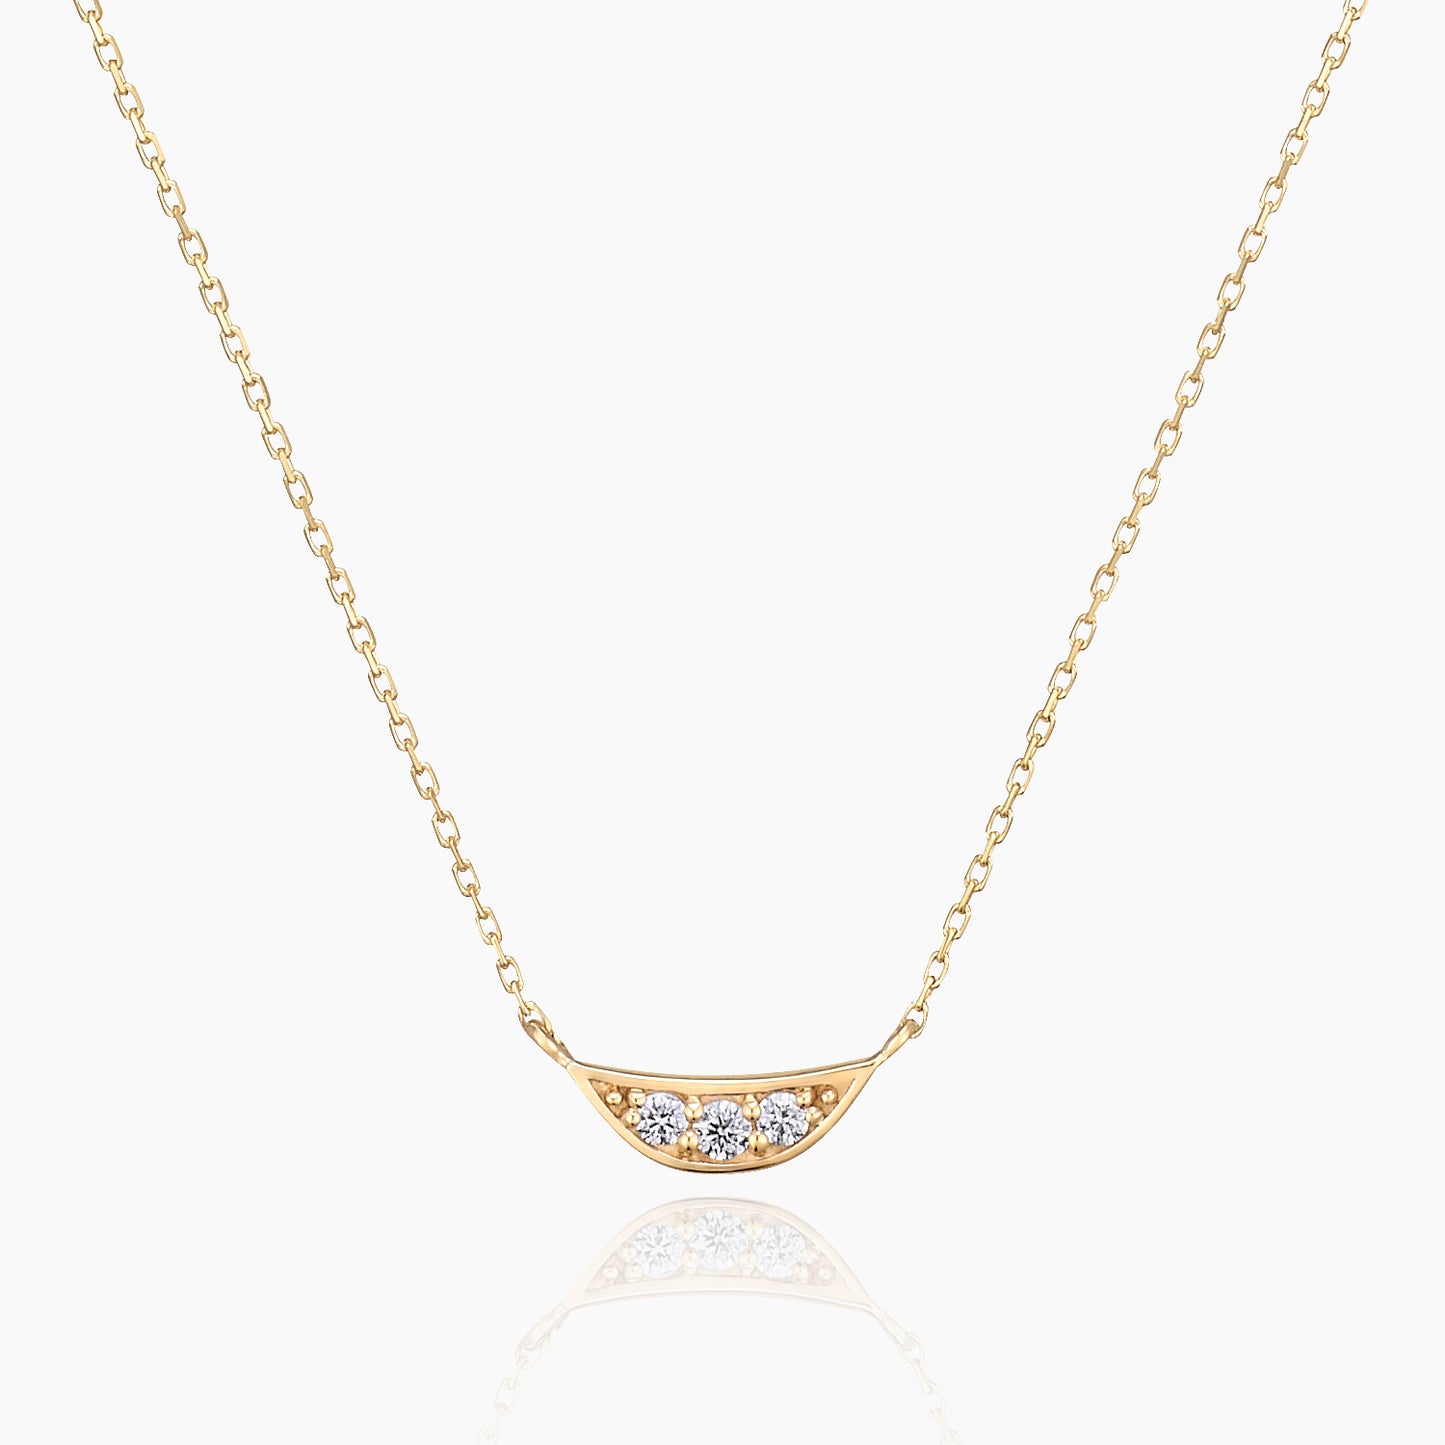 Finn フィン ネックレス 宝石は天然ダイヤモンド 計0.02ct 素材はK10のイエローゴールド 商品番号MA29 正面